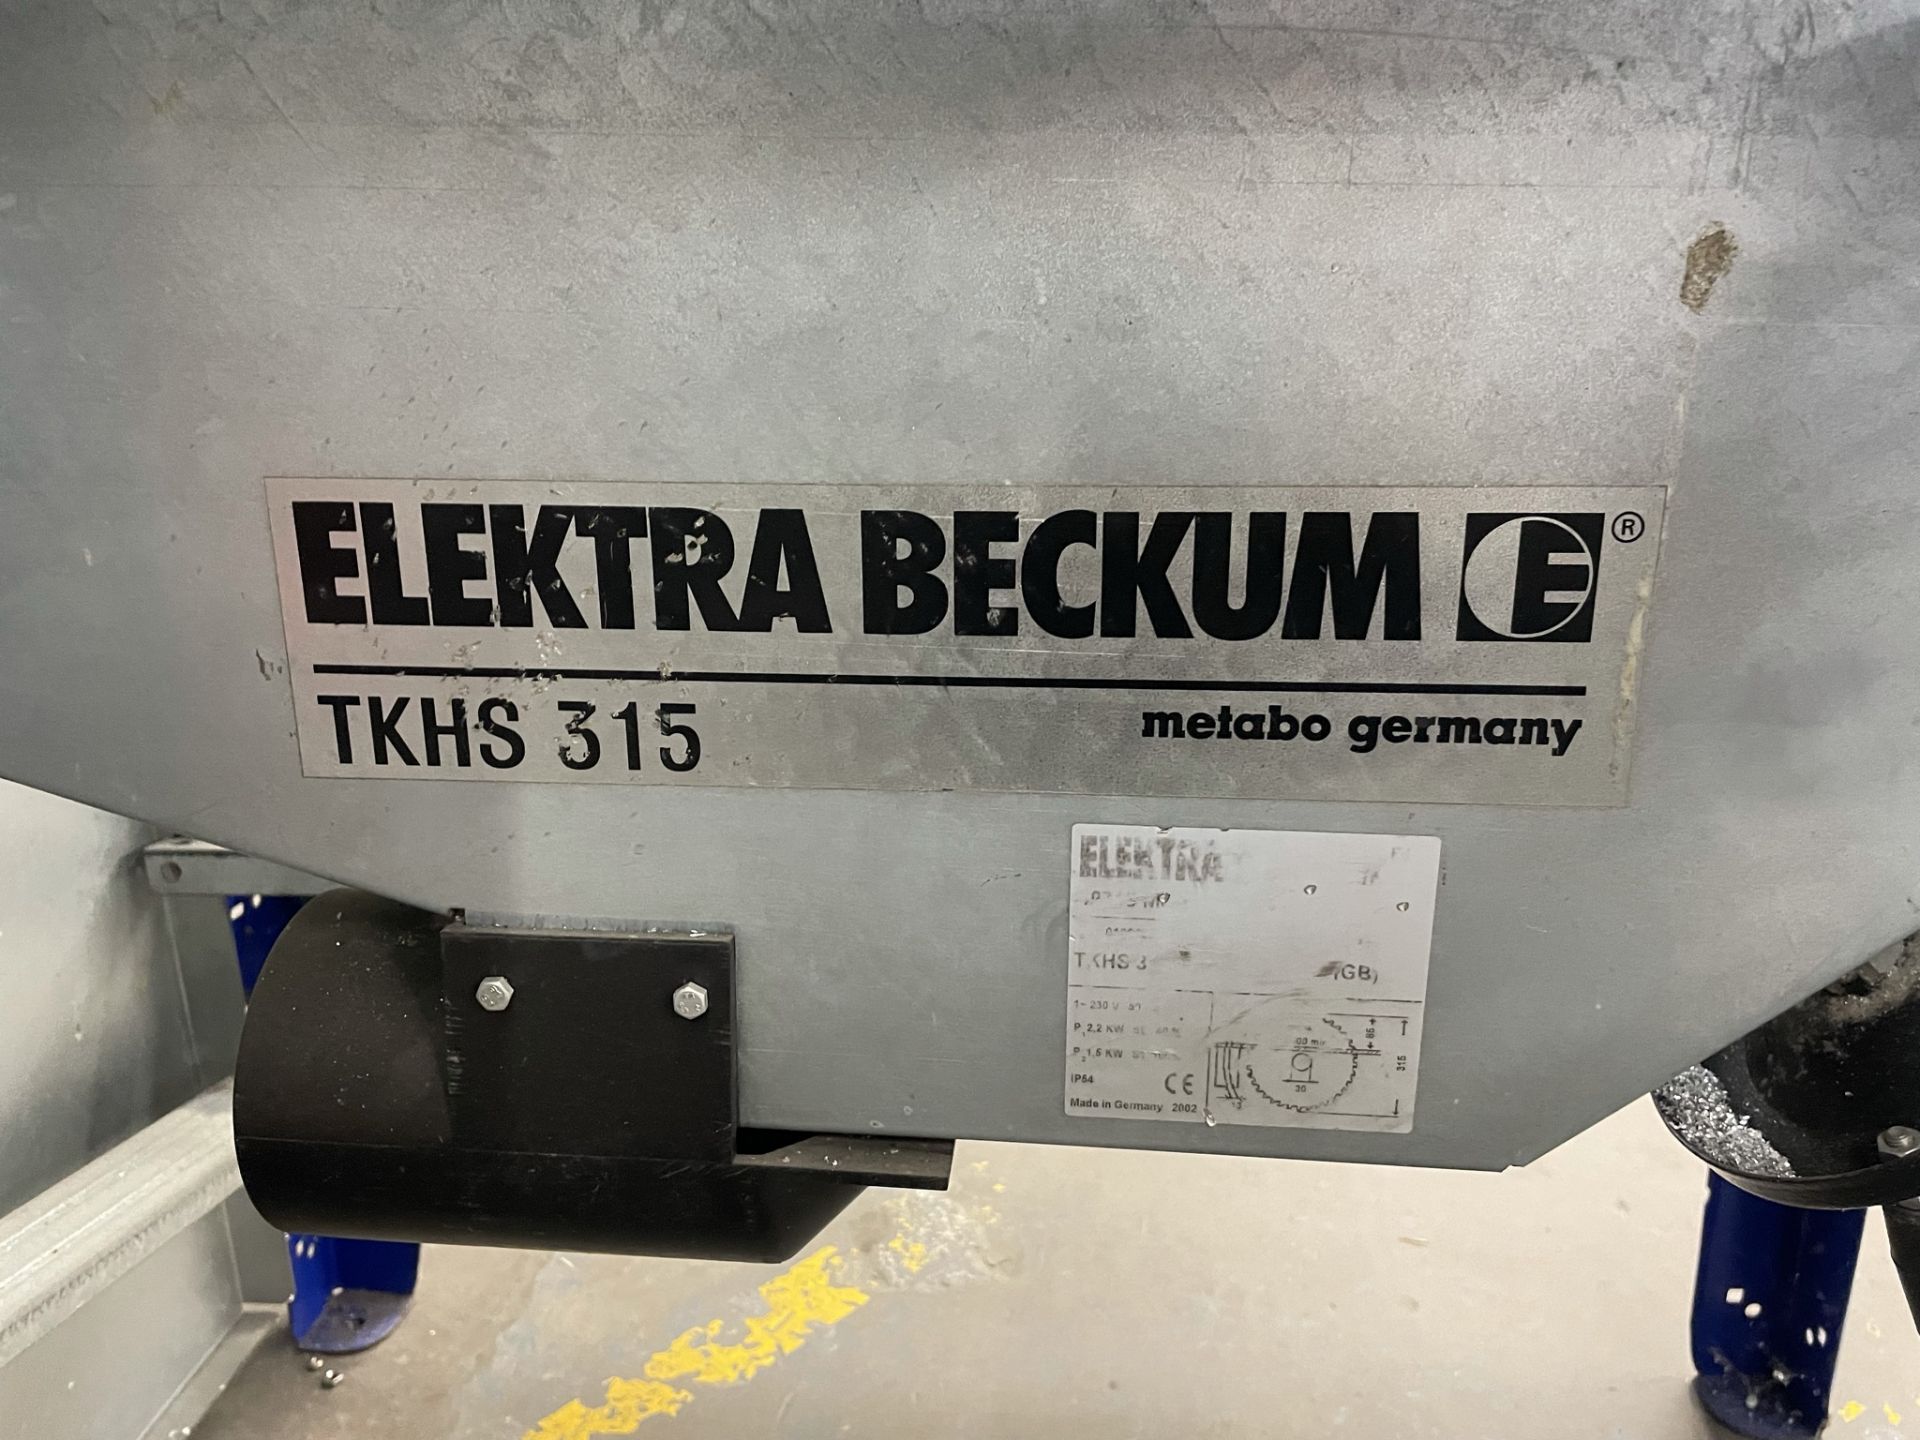 Elektra Beckum TKHS 315 Table Saw - Image 2 of 3